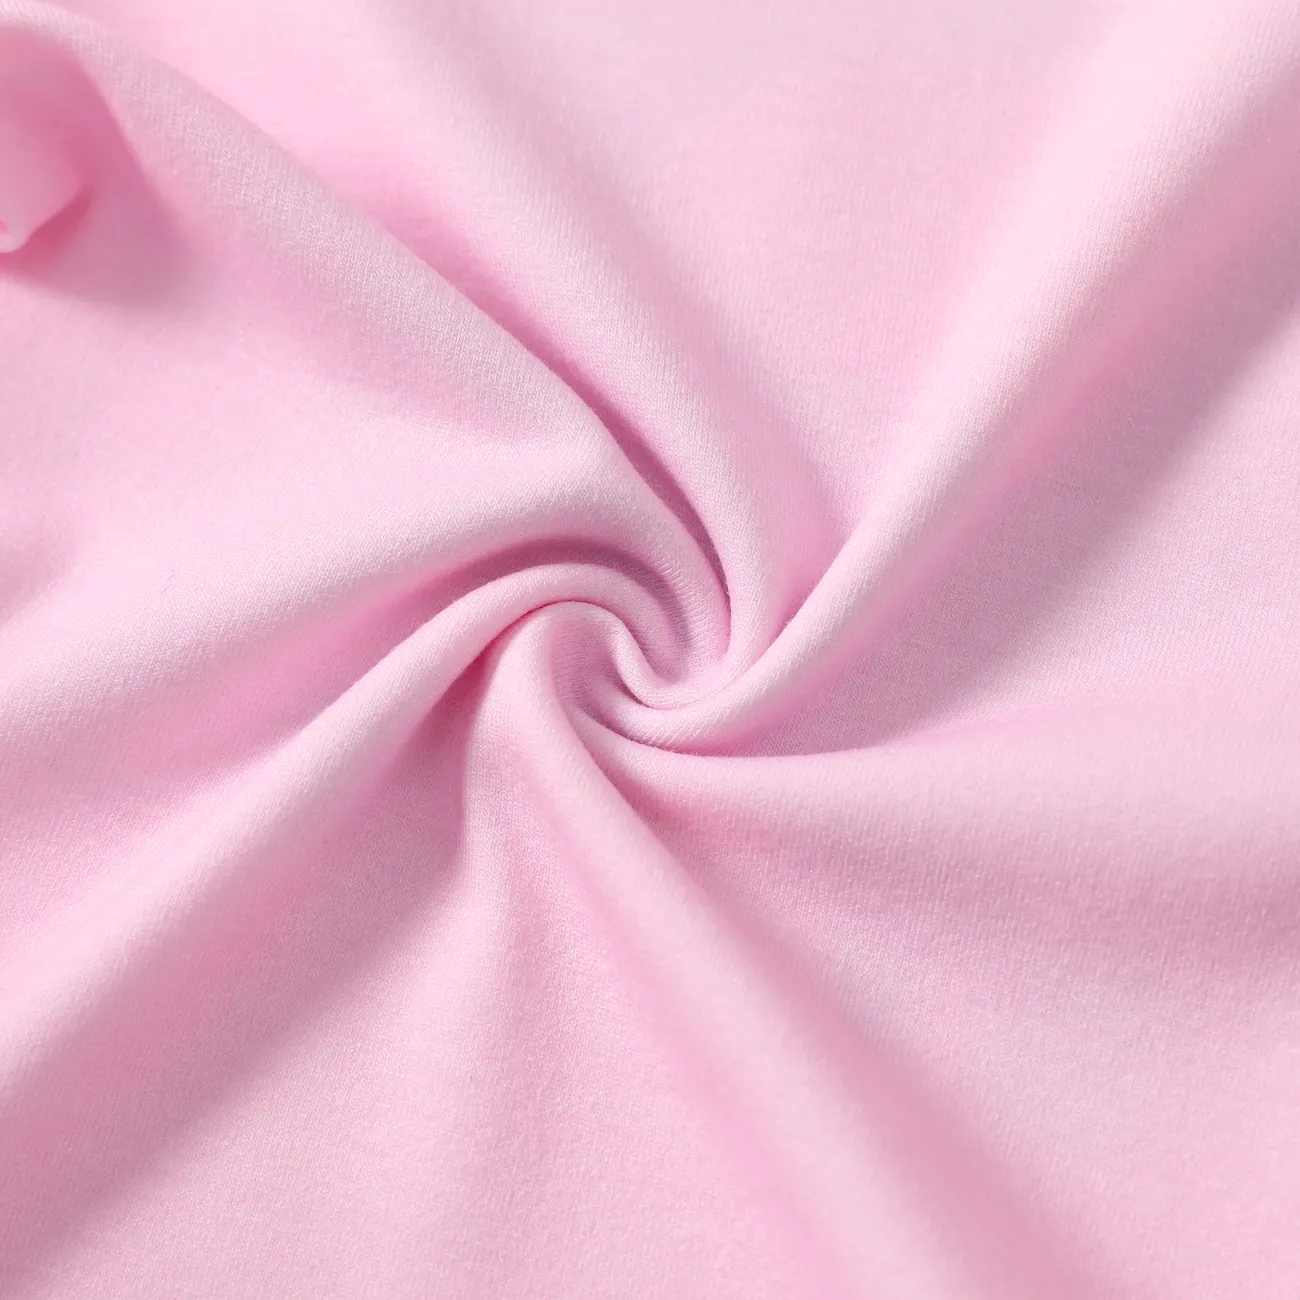 Disney Stitch Baby Girls 1pc Naia™ Cotton Ice Cream Bubble Print Onesie  Pink big image 1